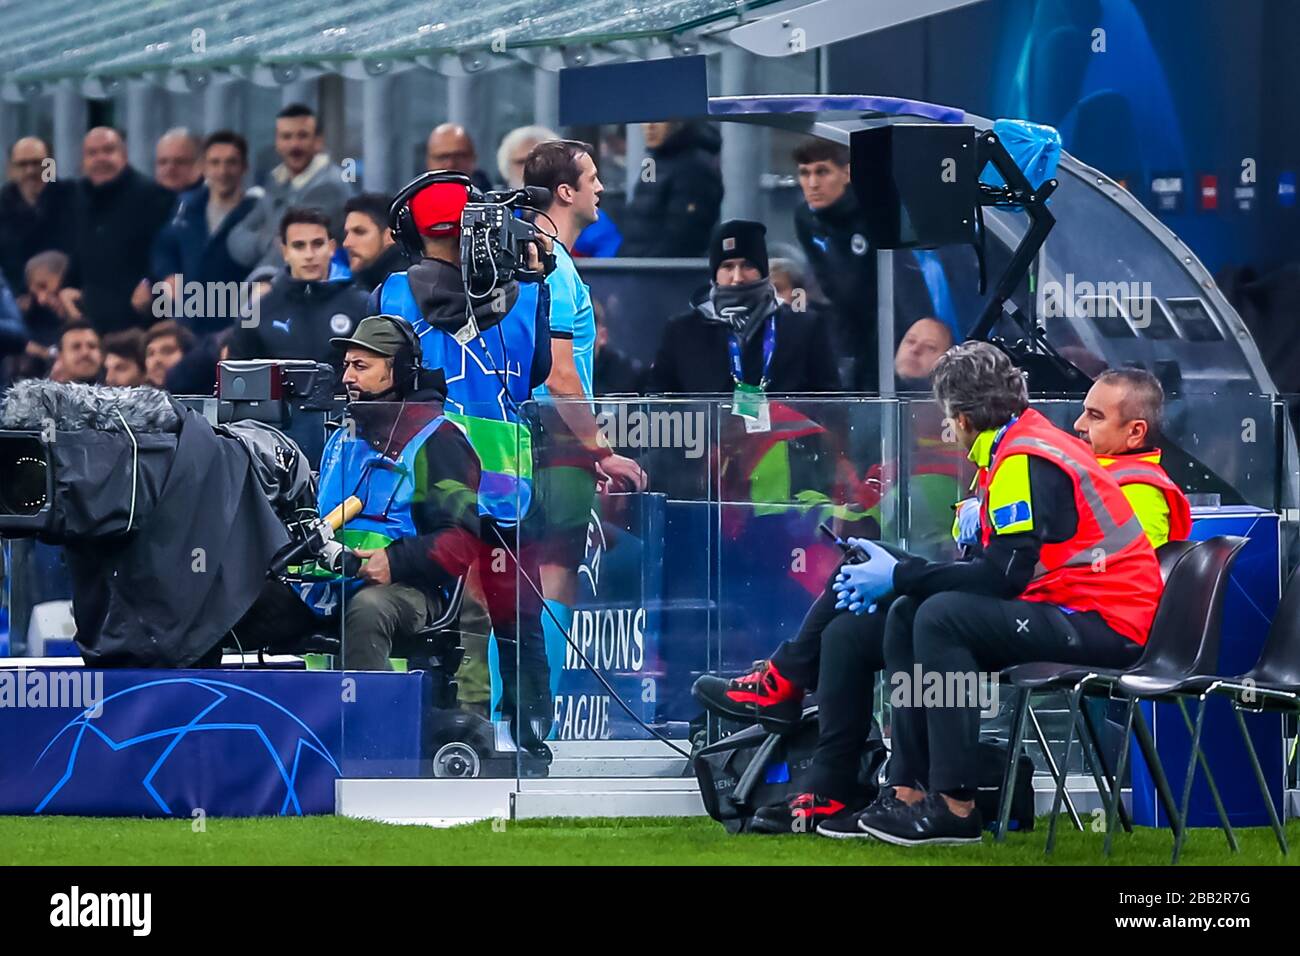 VAR during soccer season 2019/20 symbolic images - Photo credit Fabrizio Carabelli /LM/ Stock Photo